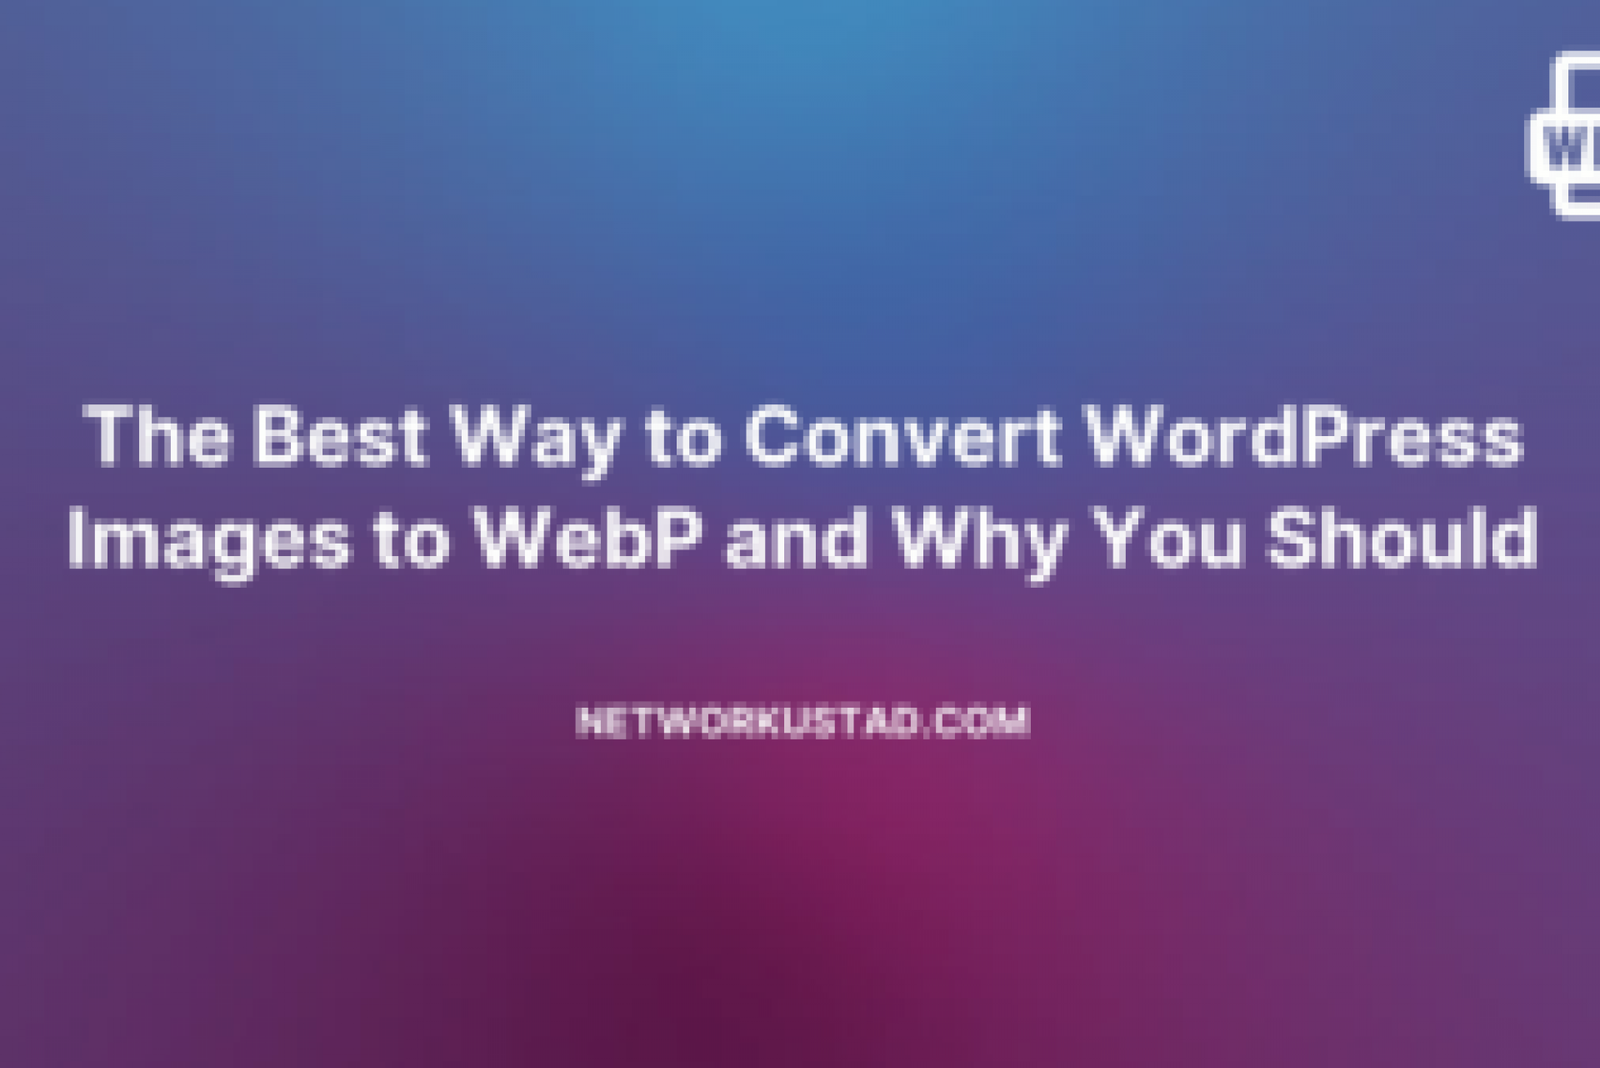 The Best Way to Convert WordPress Images